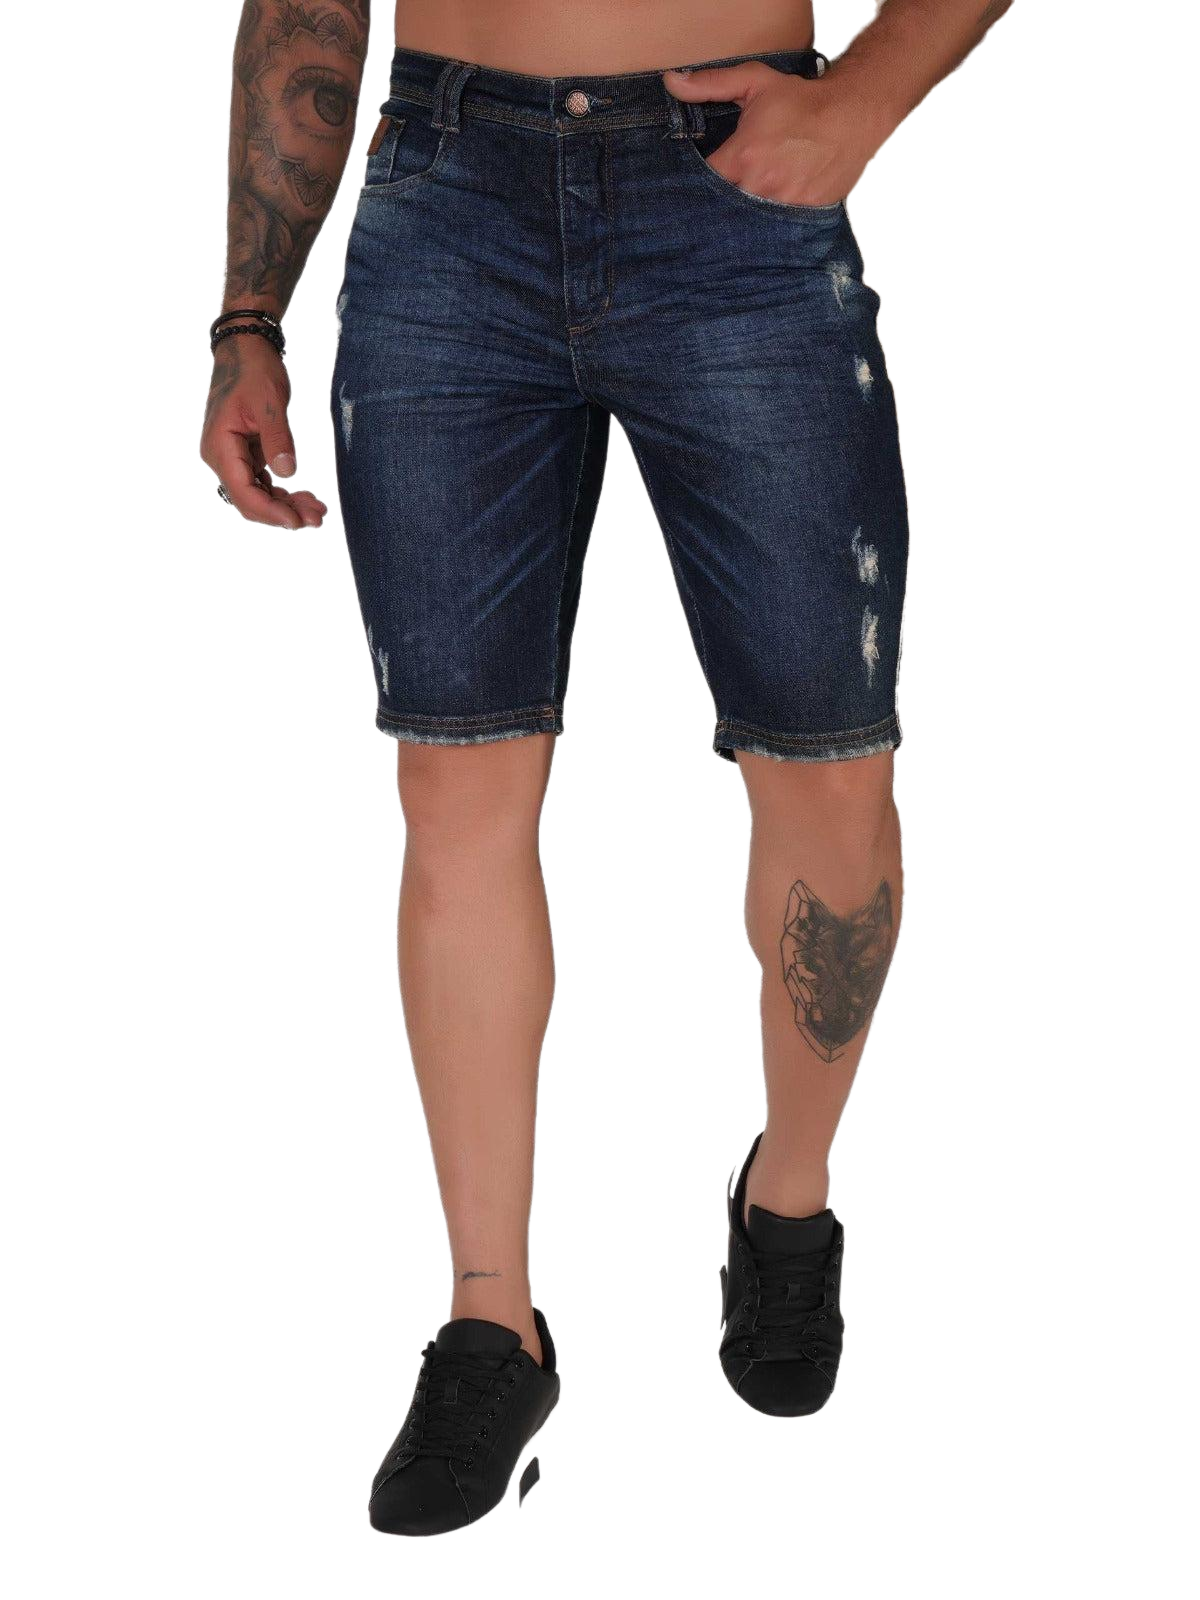 Pit Bull Jeans Men's Jeans Shorts 79950